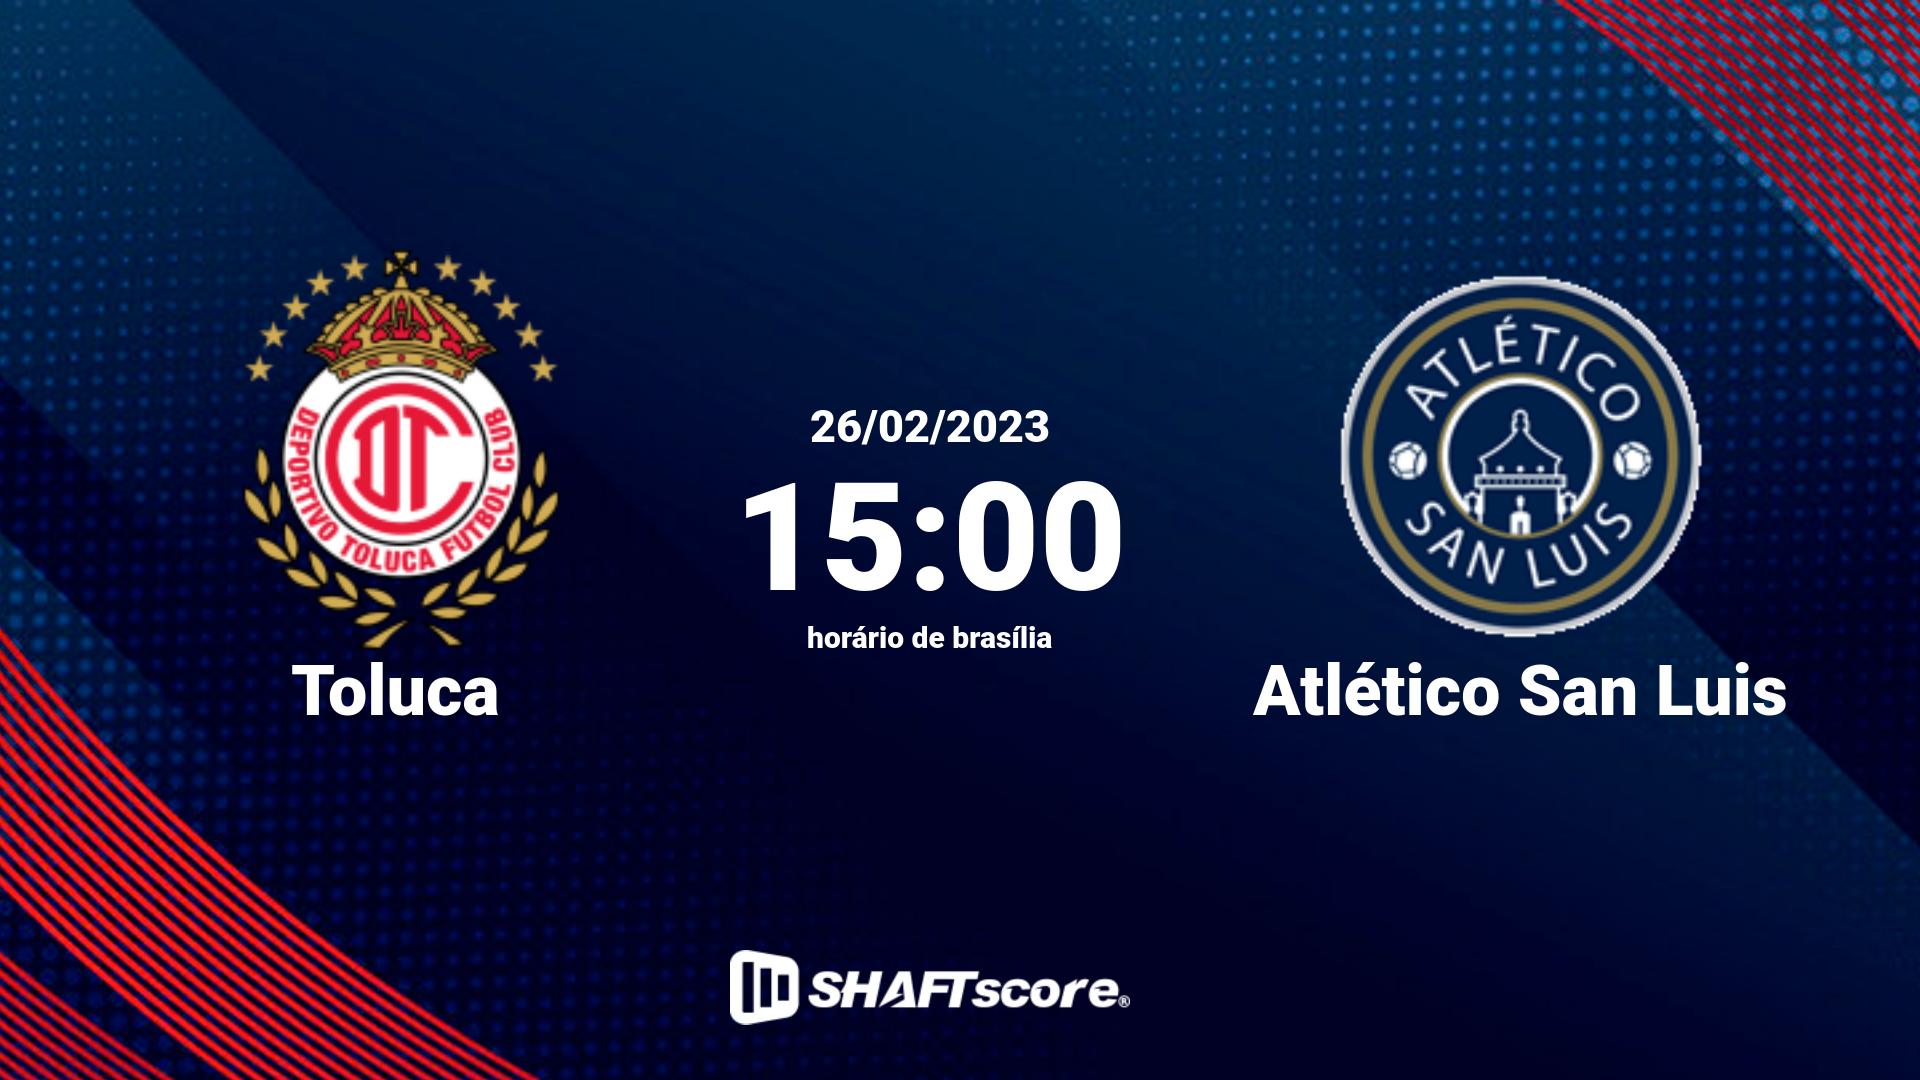 Estatísticas do jogo Toluca vs Atlético San Luis 26.02 15:00